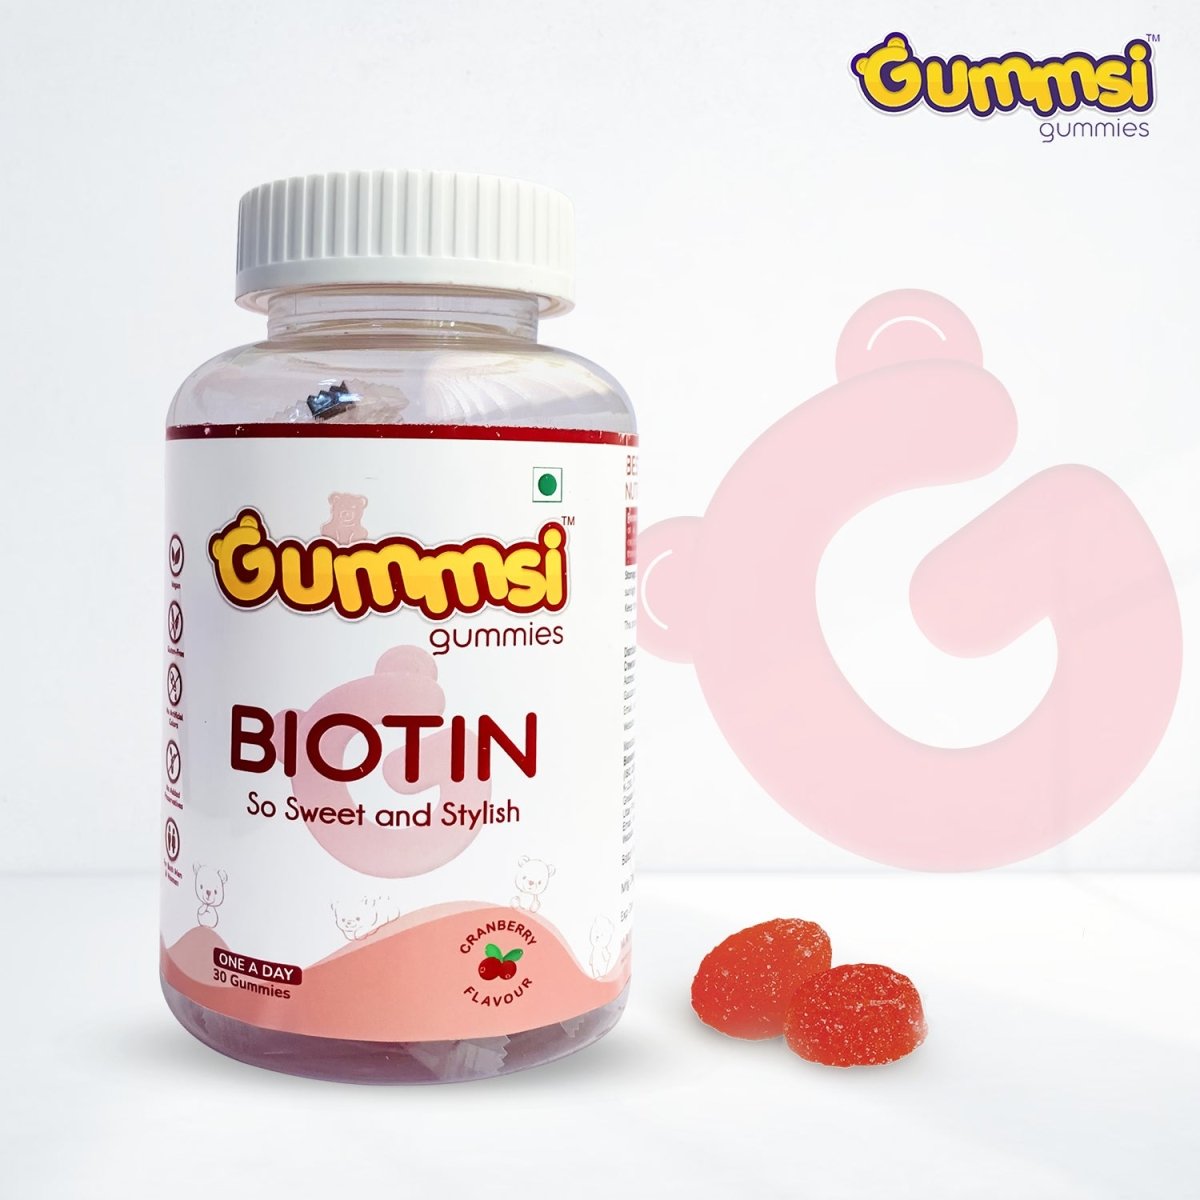 Biotin Gummies - Reduce Hairfall & Hair Thinning | Promotes New Hair Growth | Vitamin B7 for Hair and Nail Health